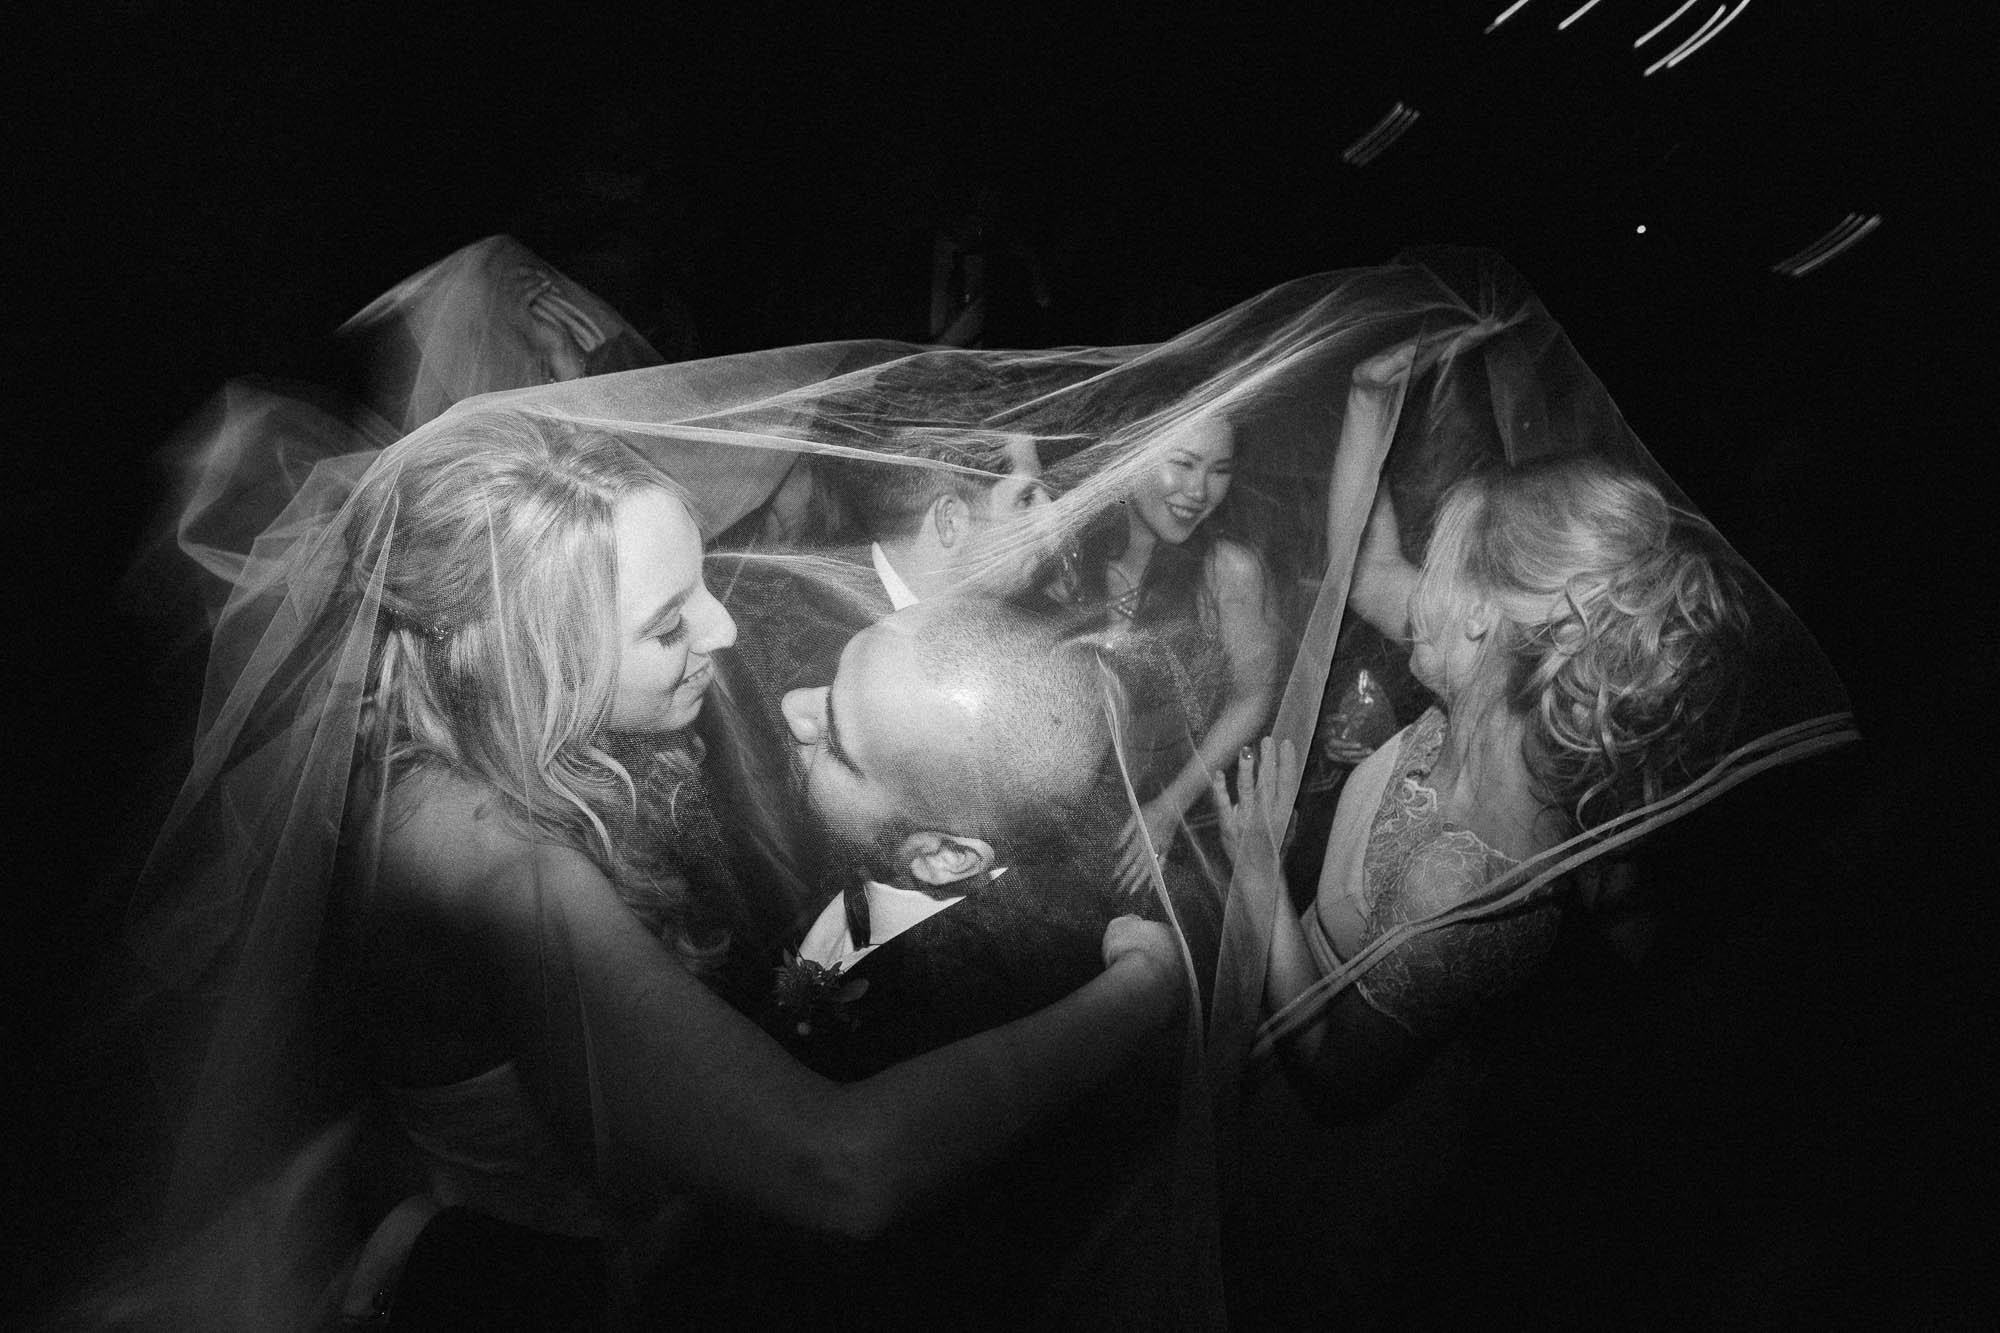 Bride, Groom and wedding guests dance under bridal veil on dance floor